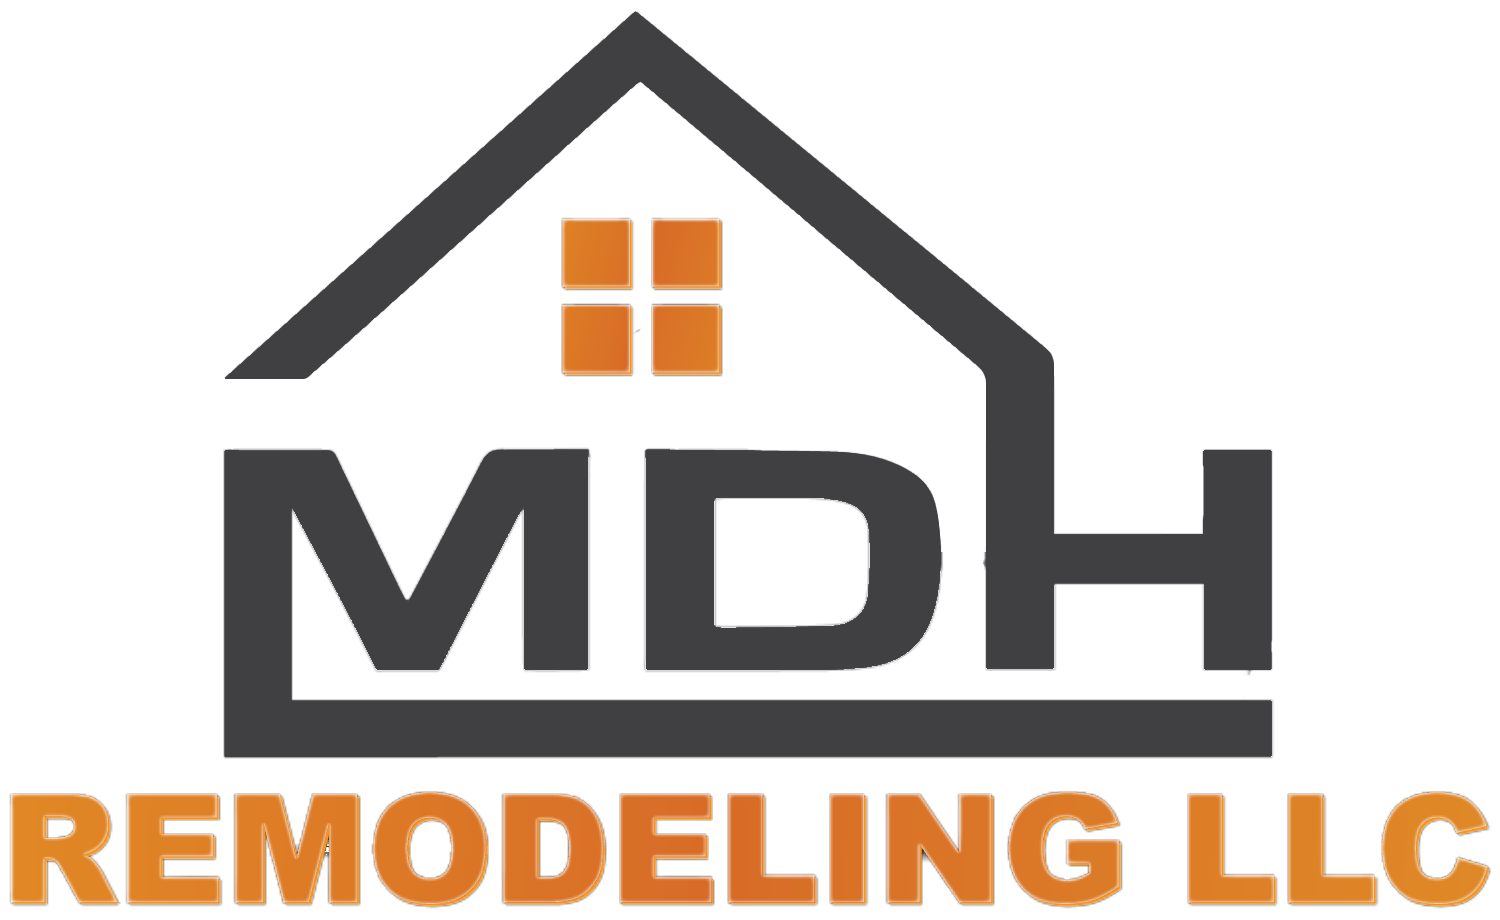 MDH Remodeling LLC